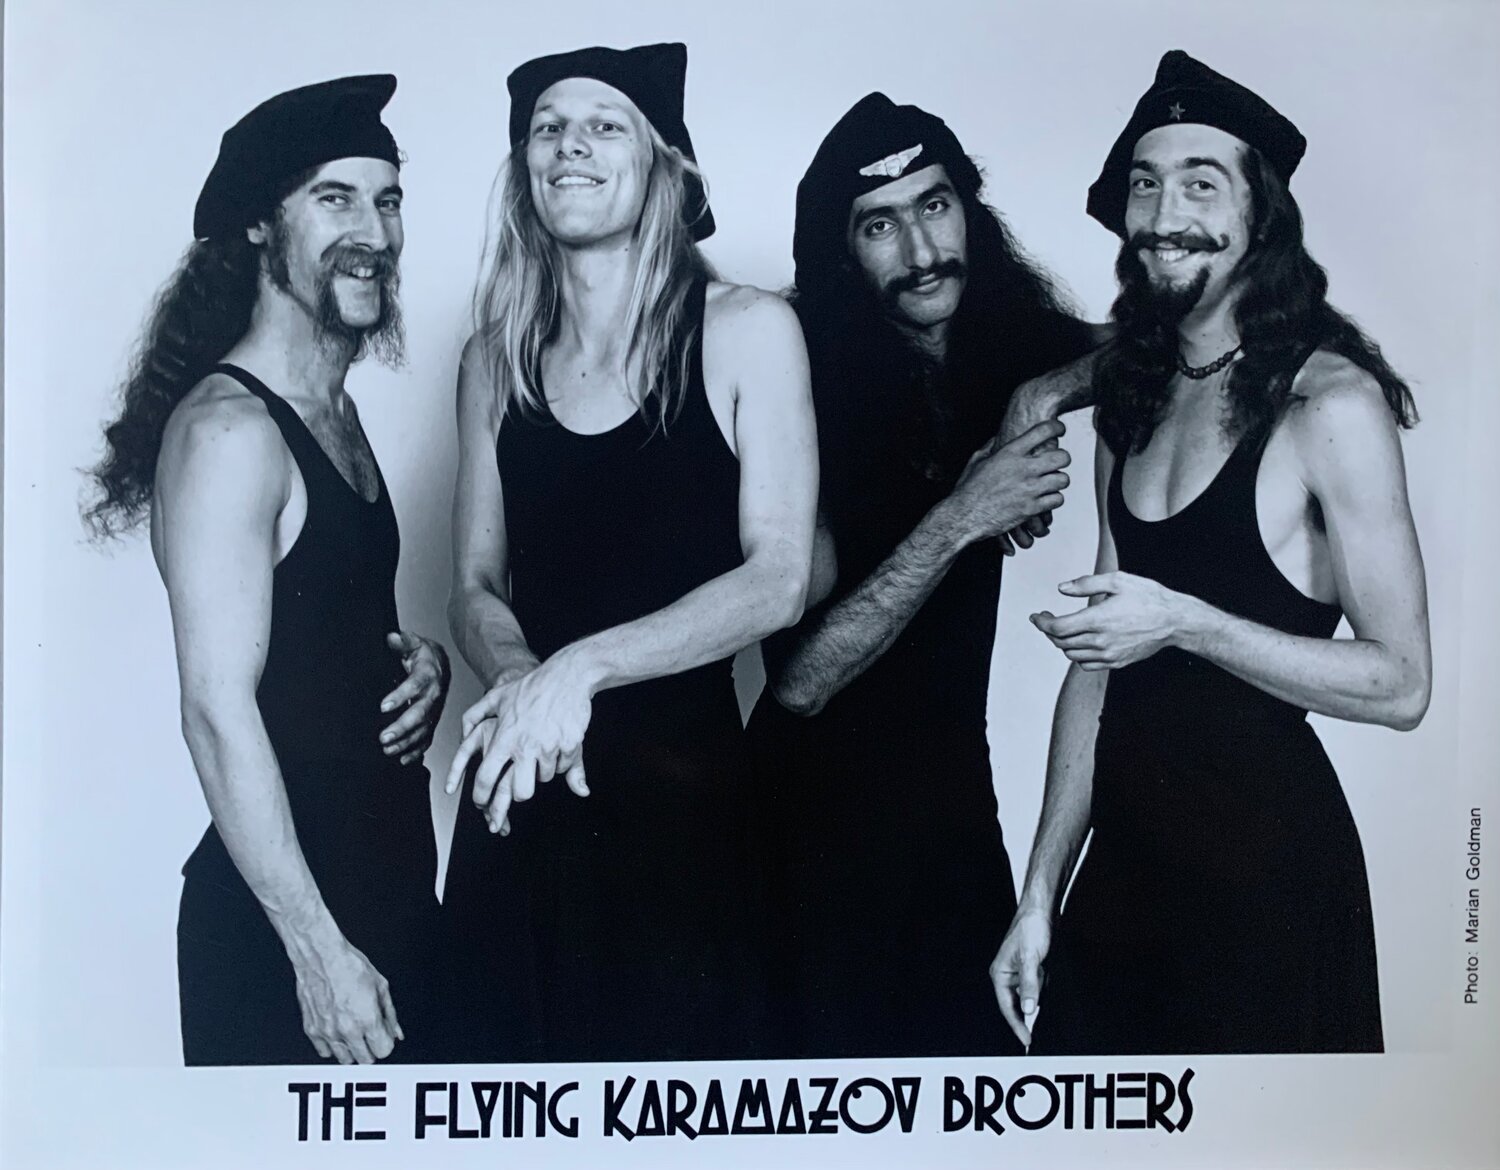 The Flying Karamazov Brothers in 1978.